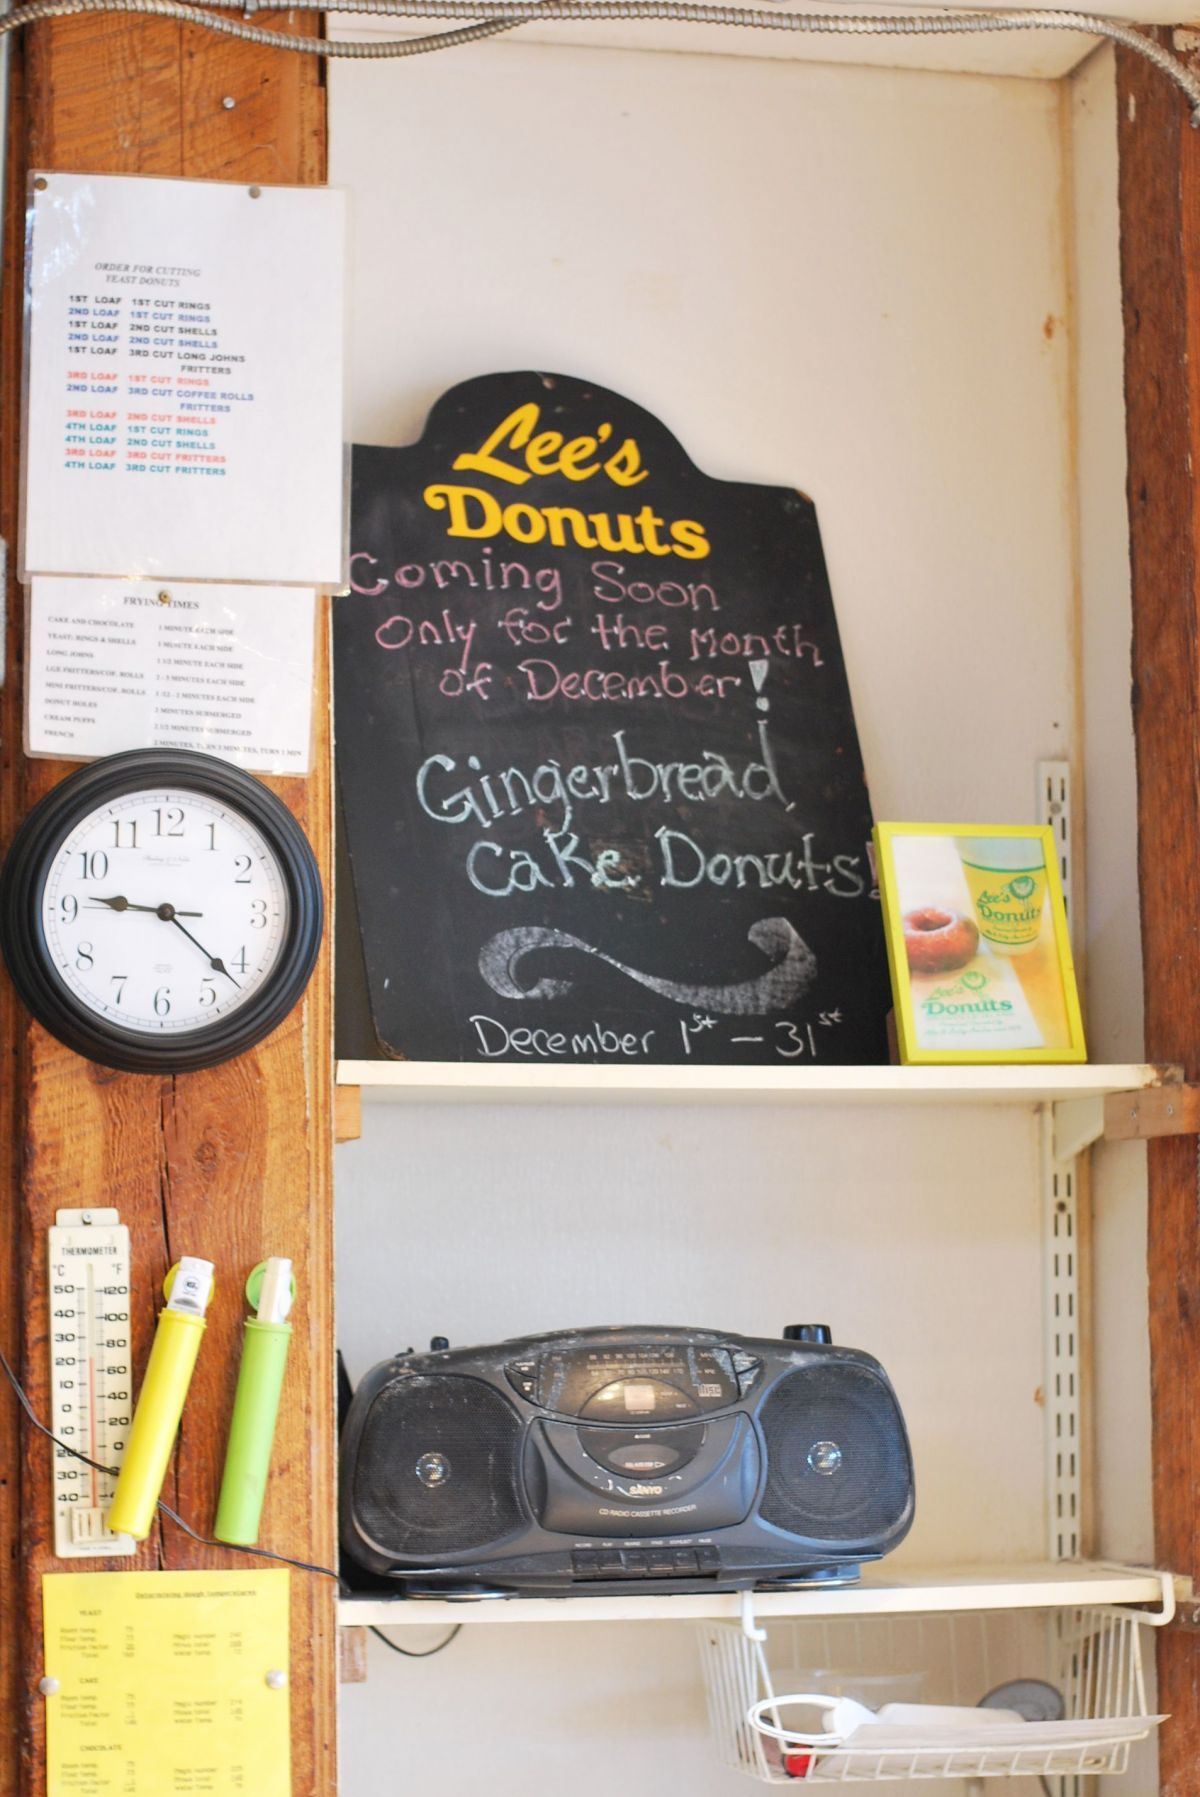 Lee's Doughnuts